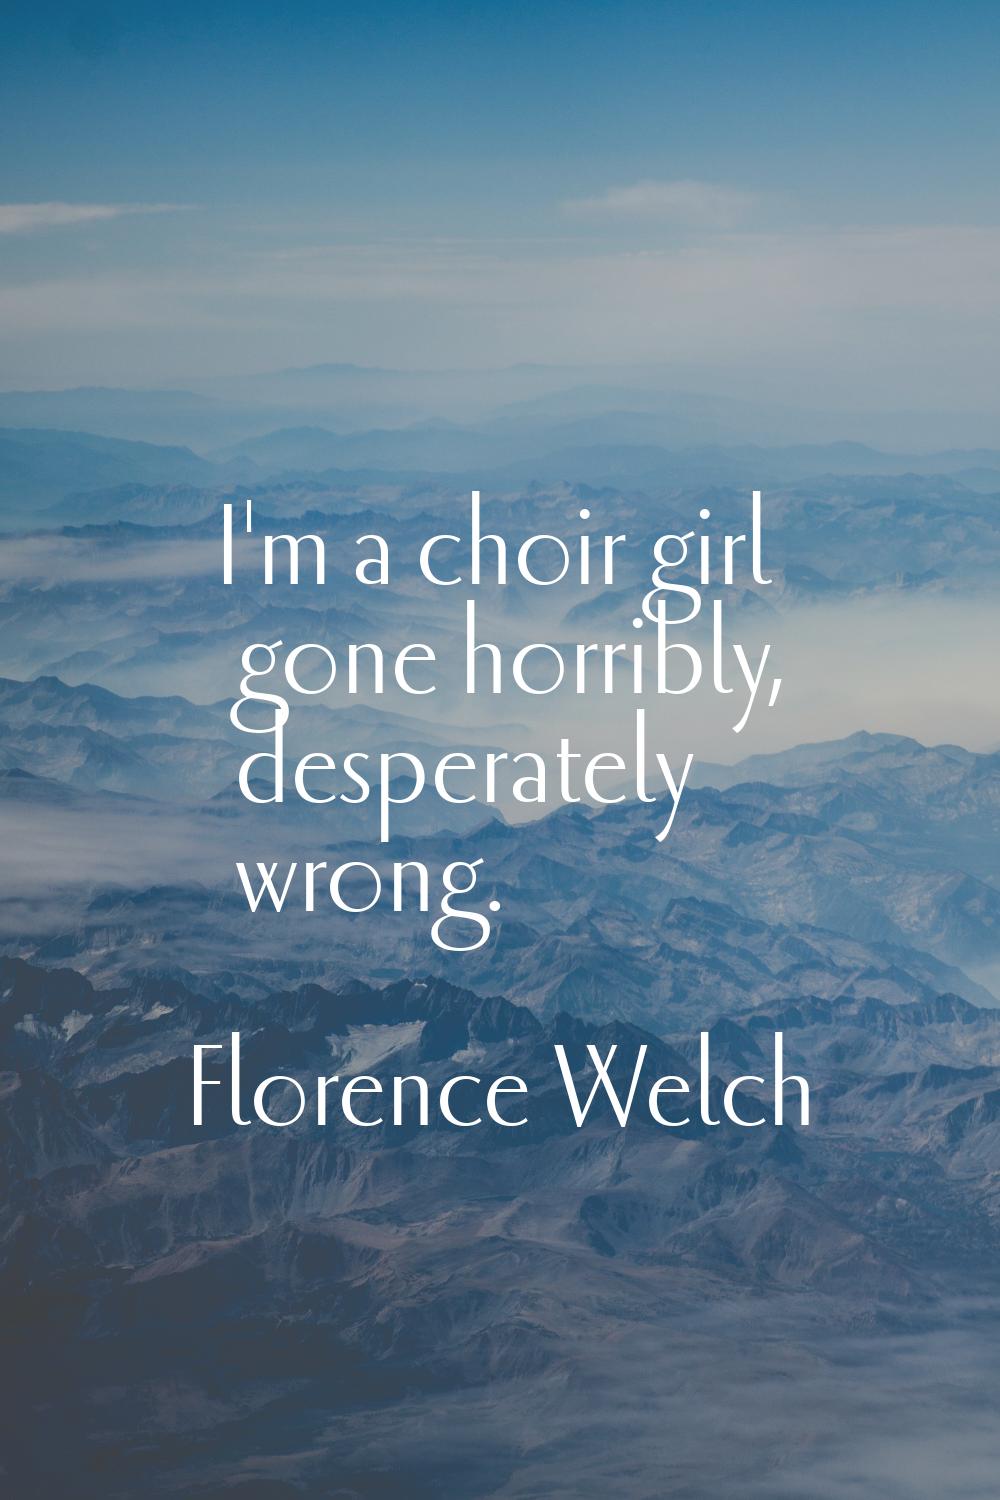 I'm a choir girl gone horribly, desperately wrong.